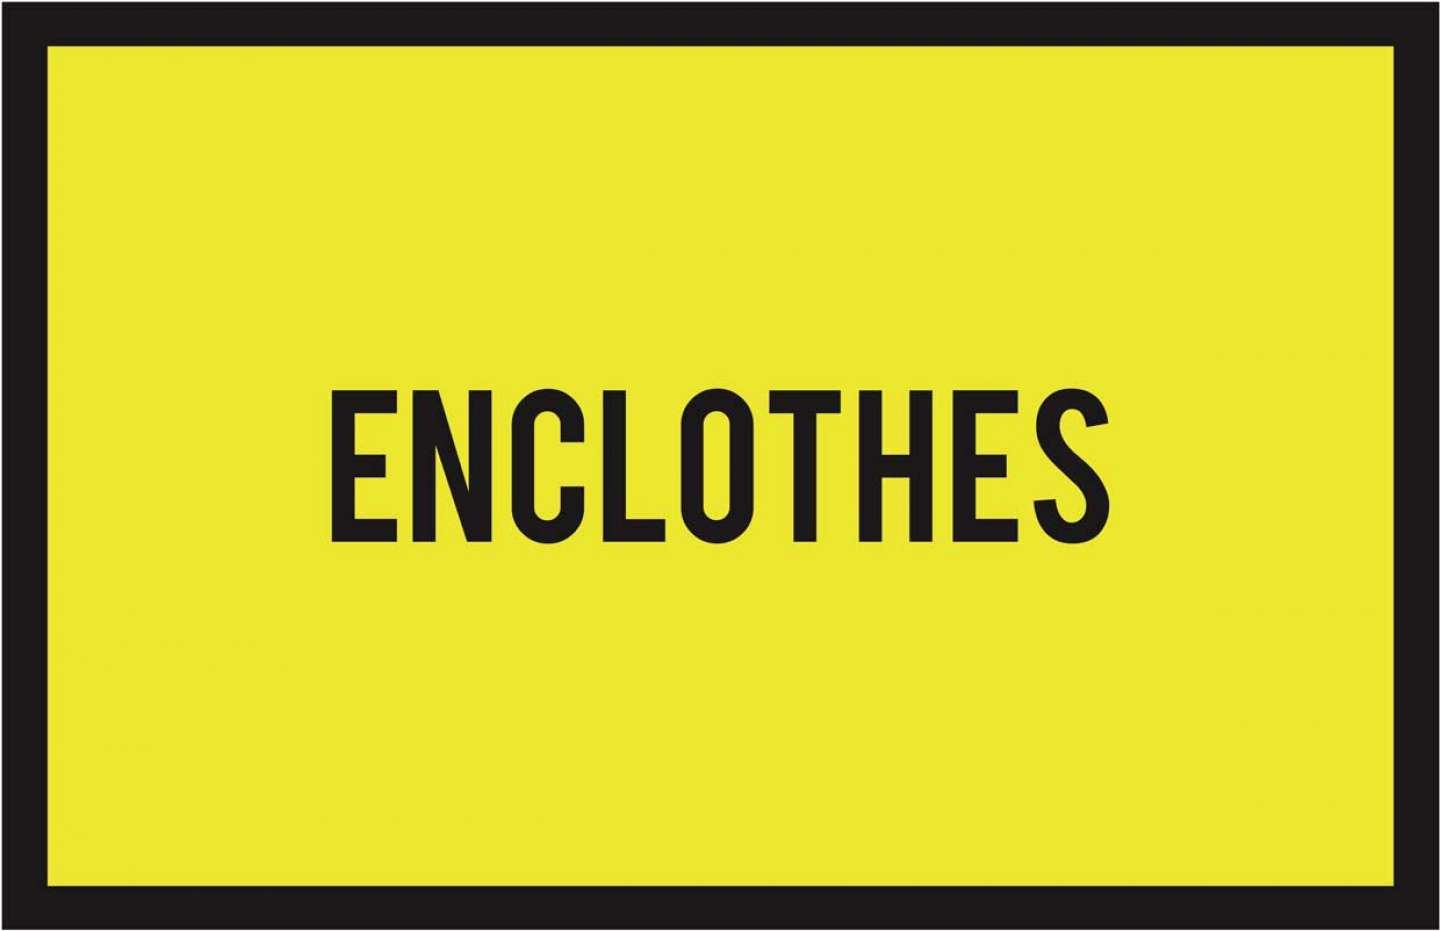 Enclothes